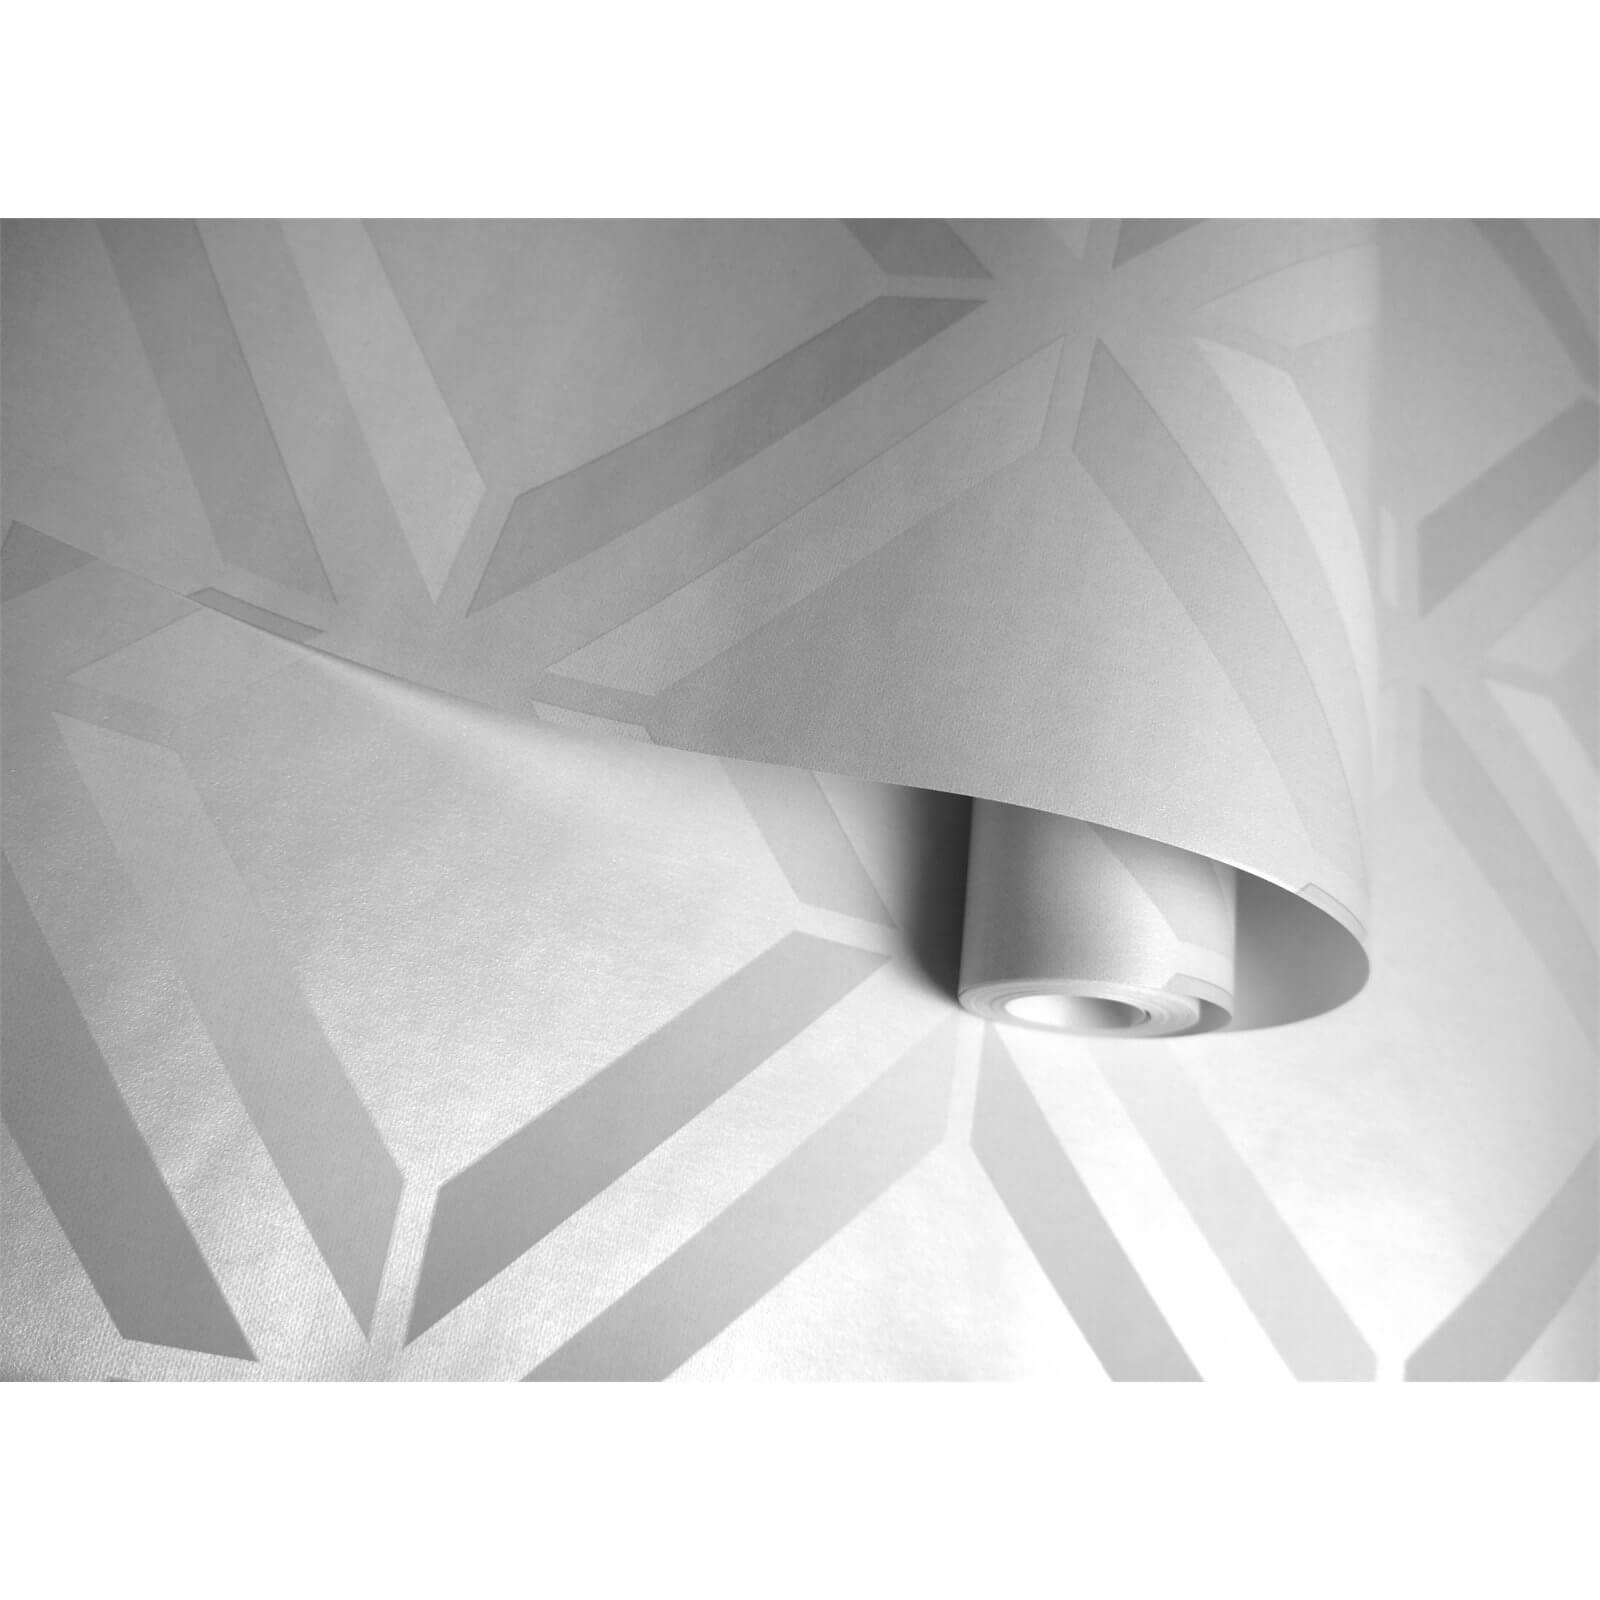 Holden Decor Lana Geometric Smooth Glitter Light Grey Wallpaper